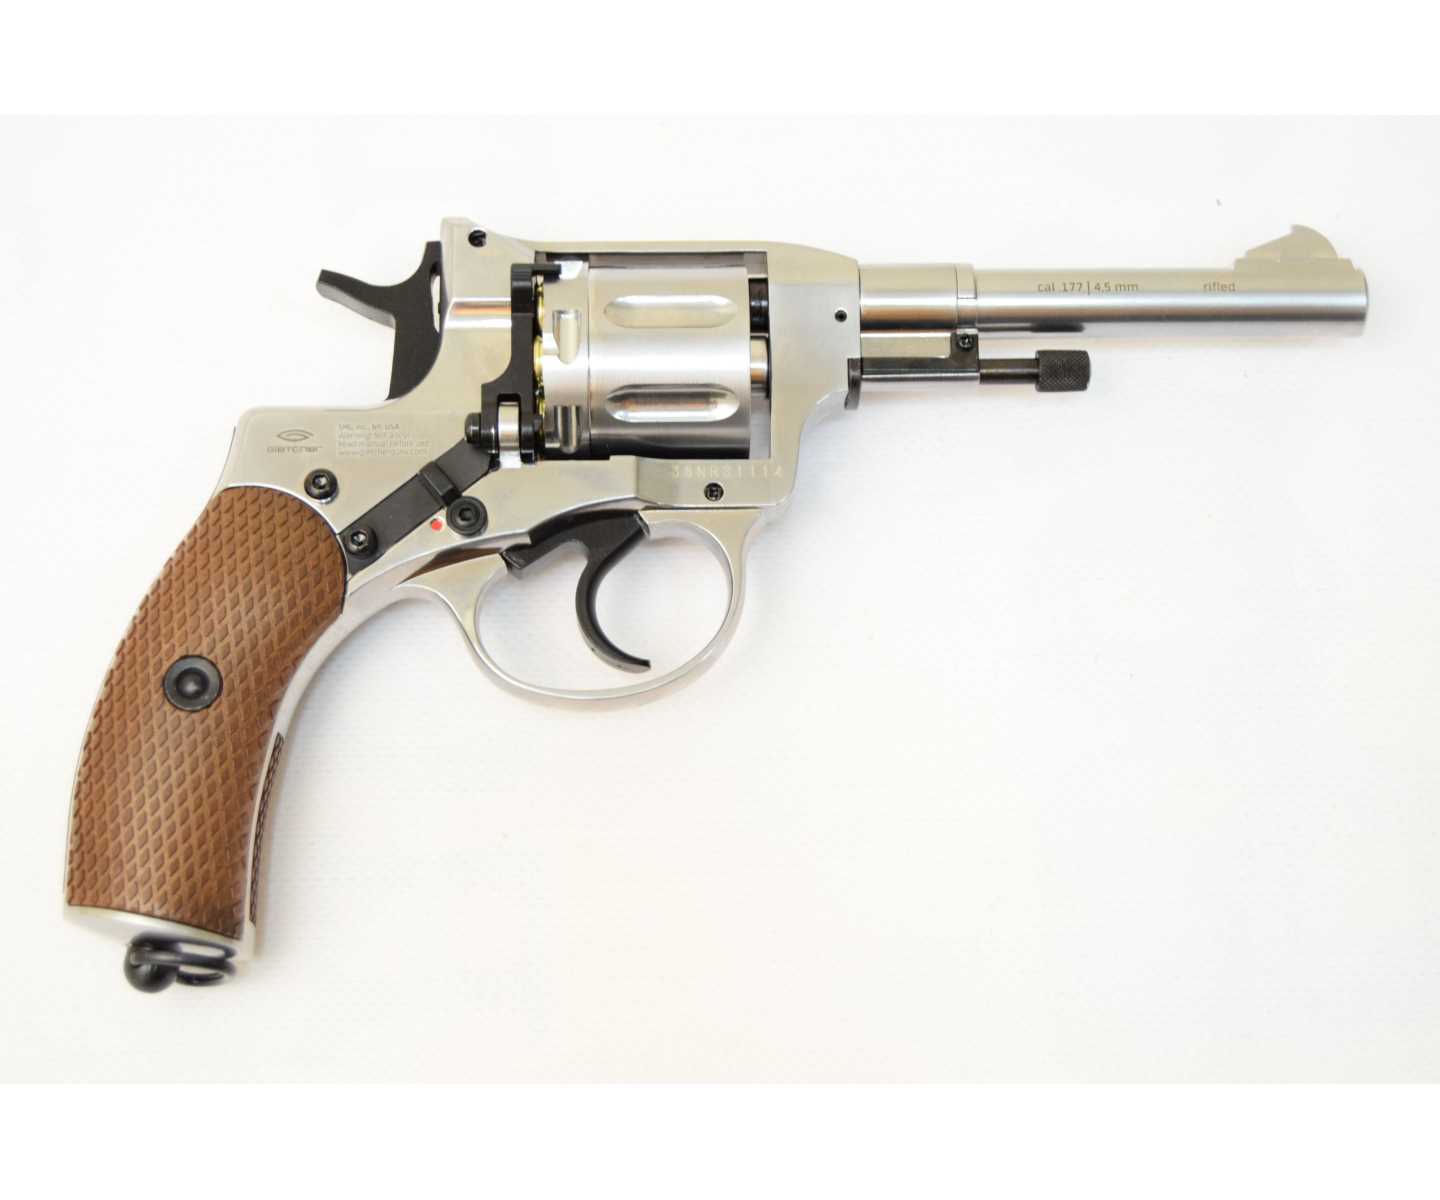 Пневматический револьвер Gletcher NGT RF Silver